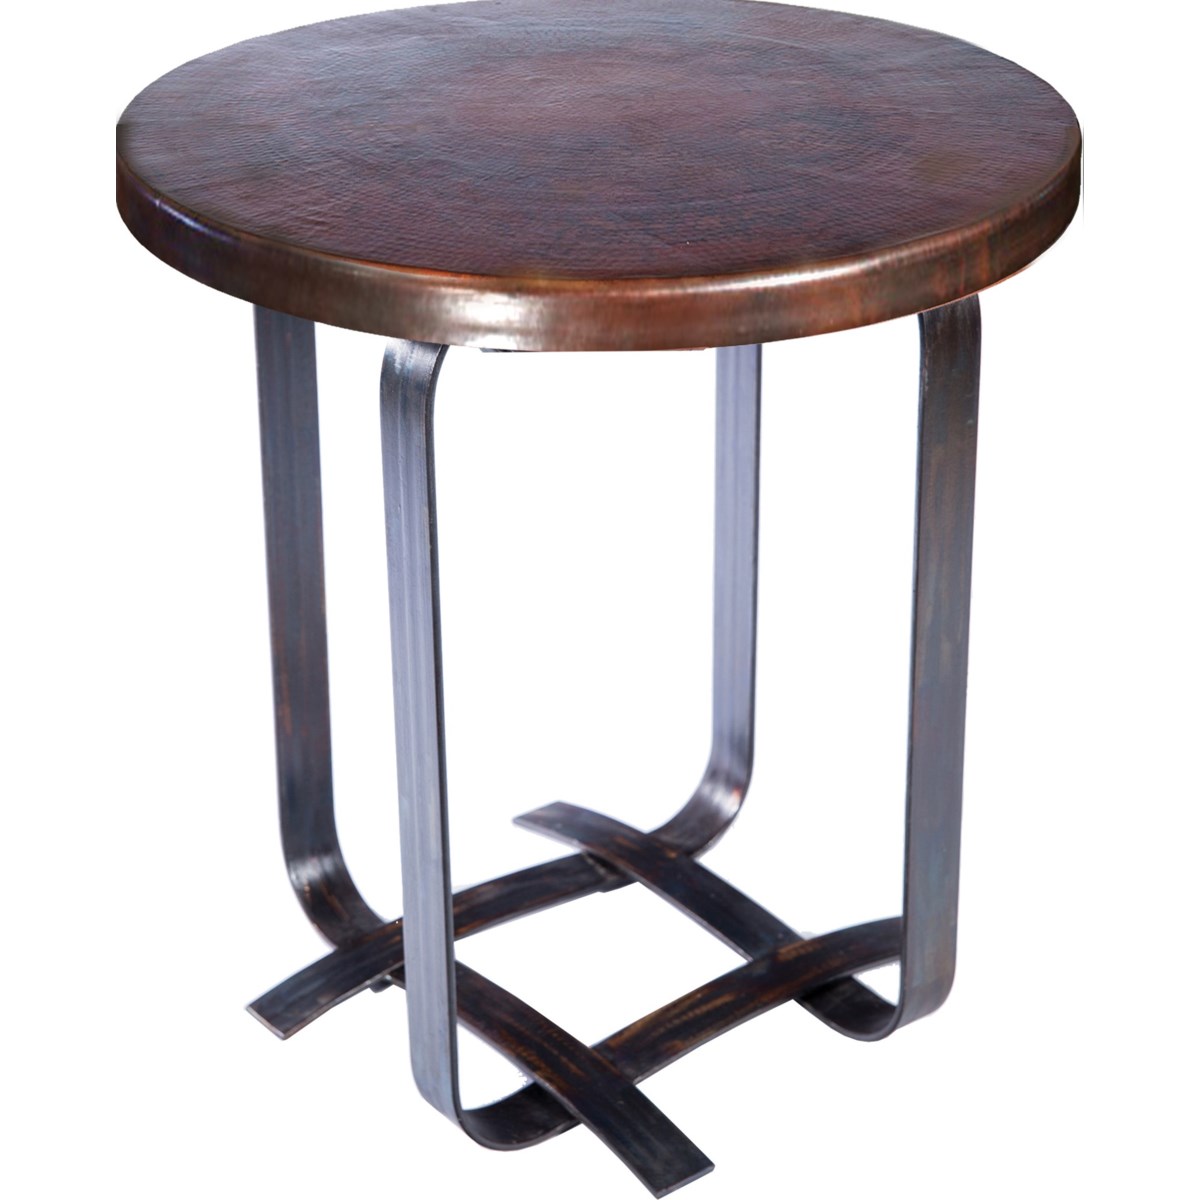 Douglas Basketweave Side Table with Dark Brown Hammered Copper Top